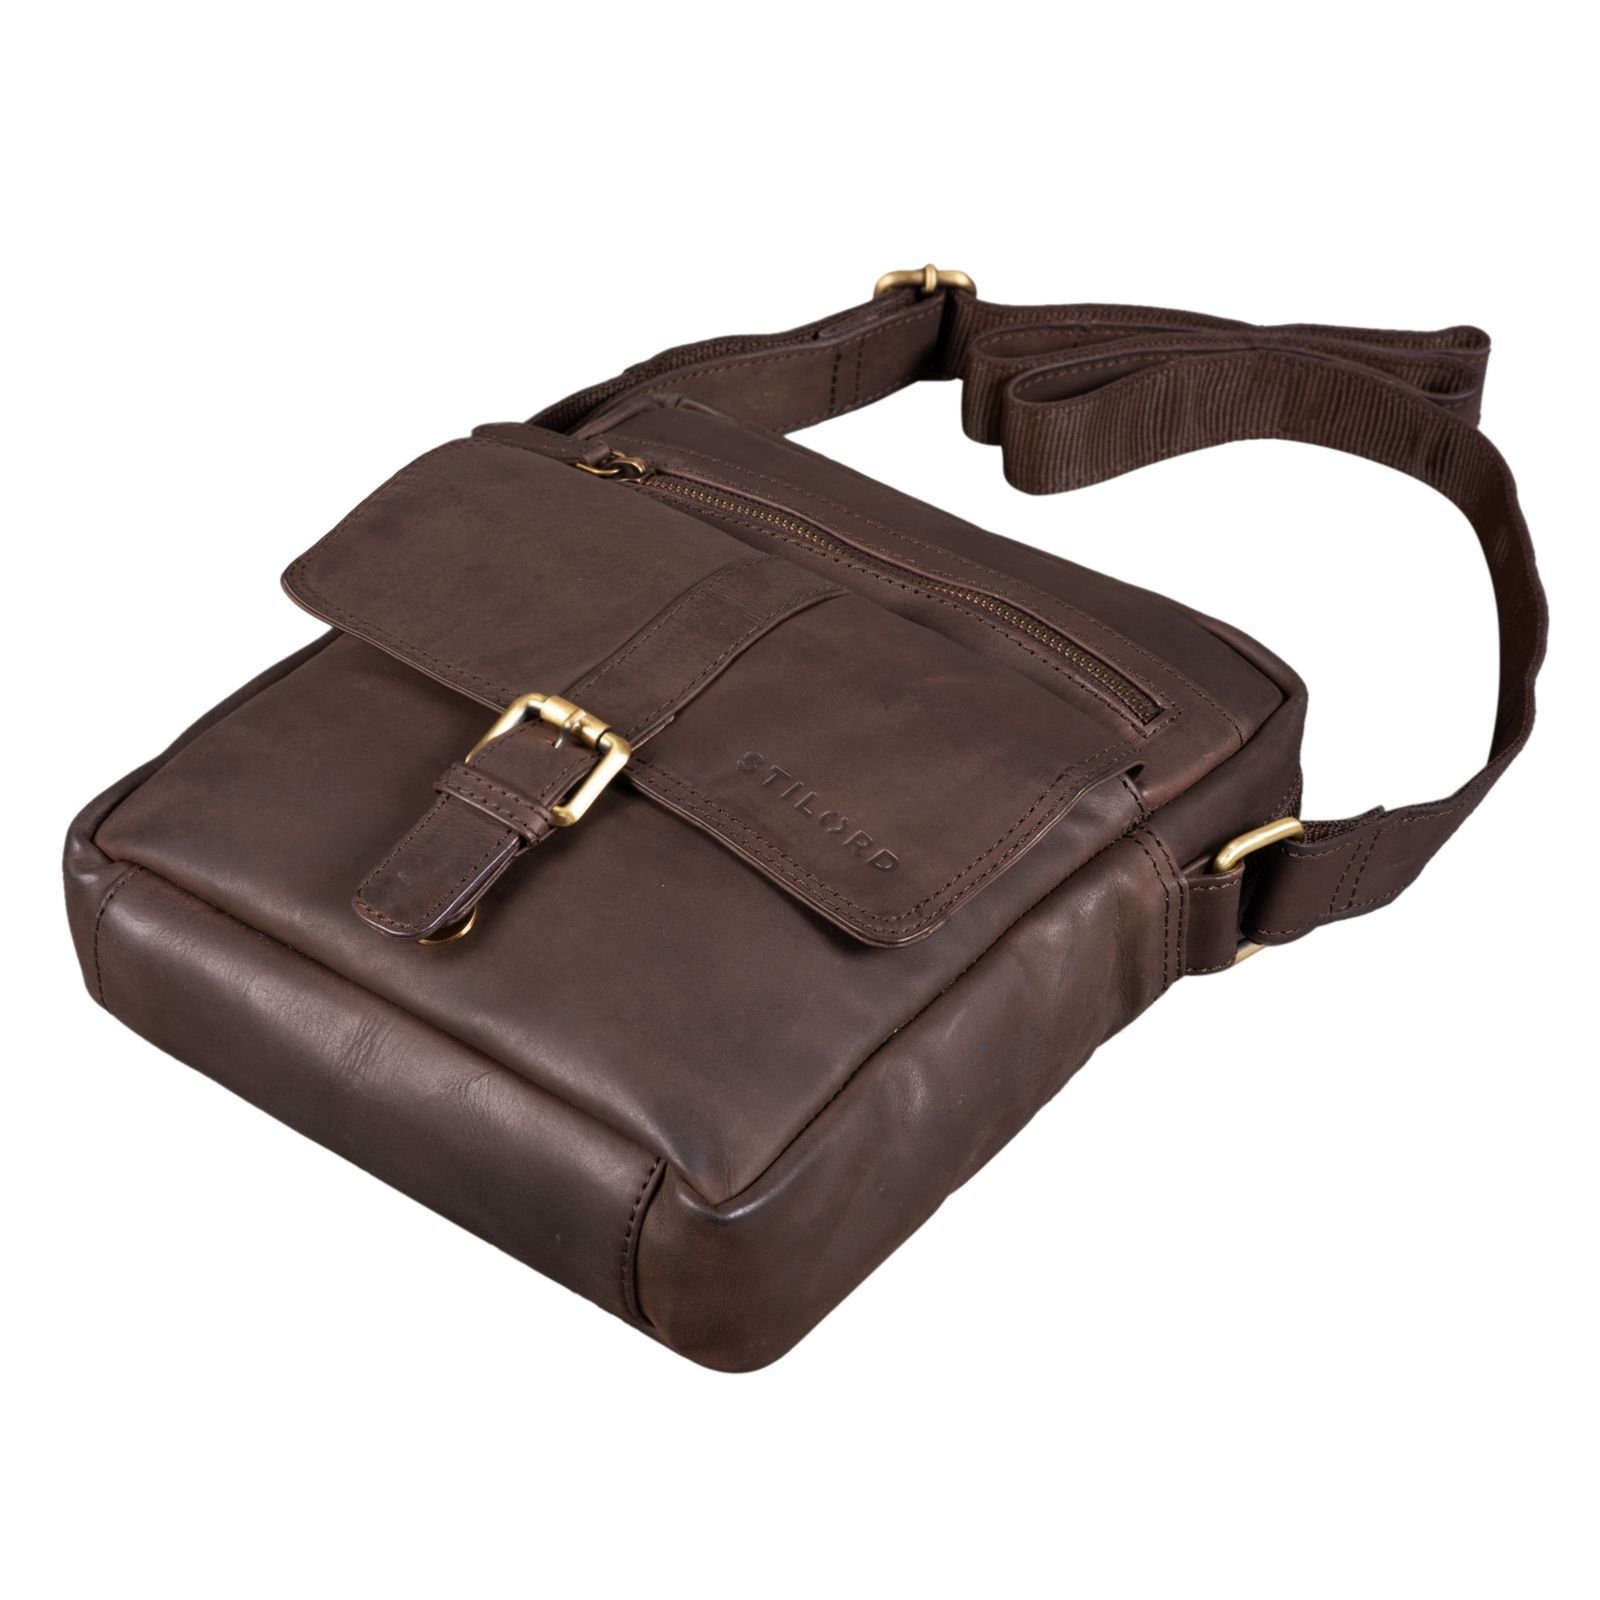 STILORD Messenger - Bag zum Tasche Umhängen Kleine Leder matt dunkelbraun "Dany"